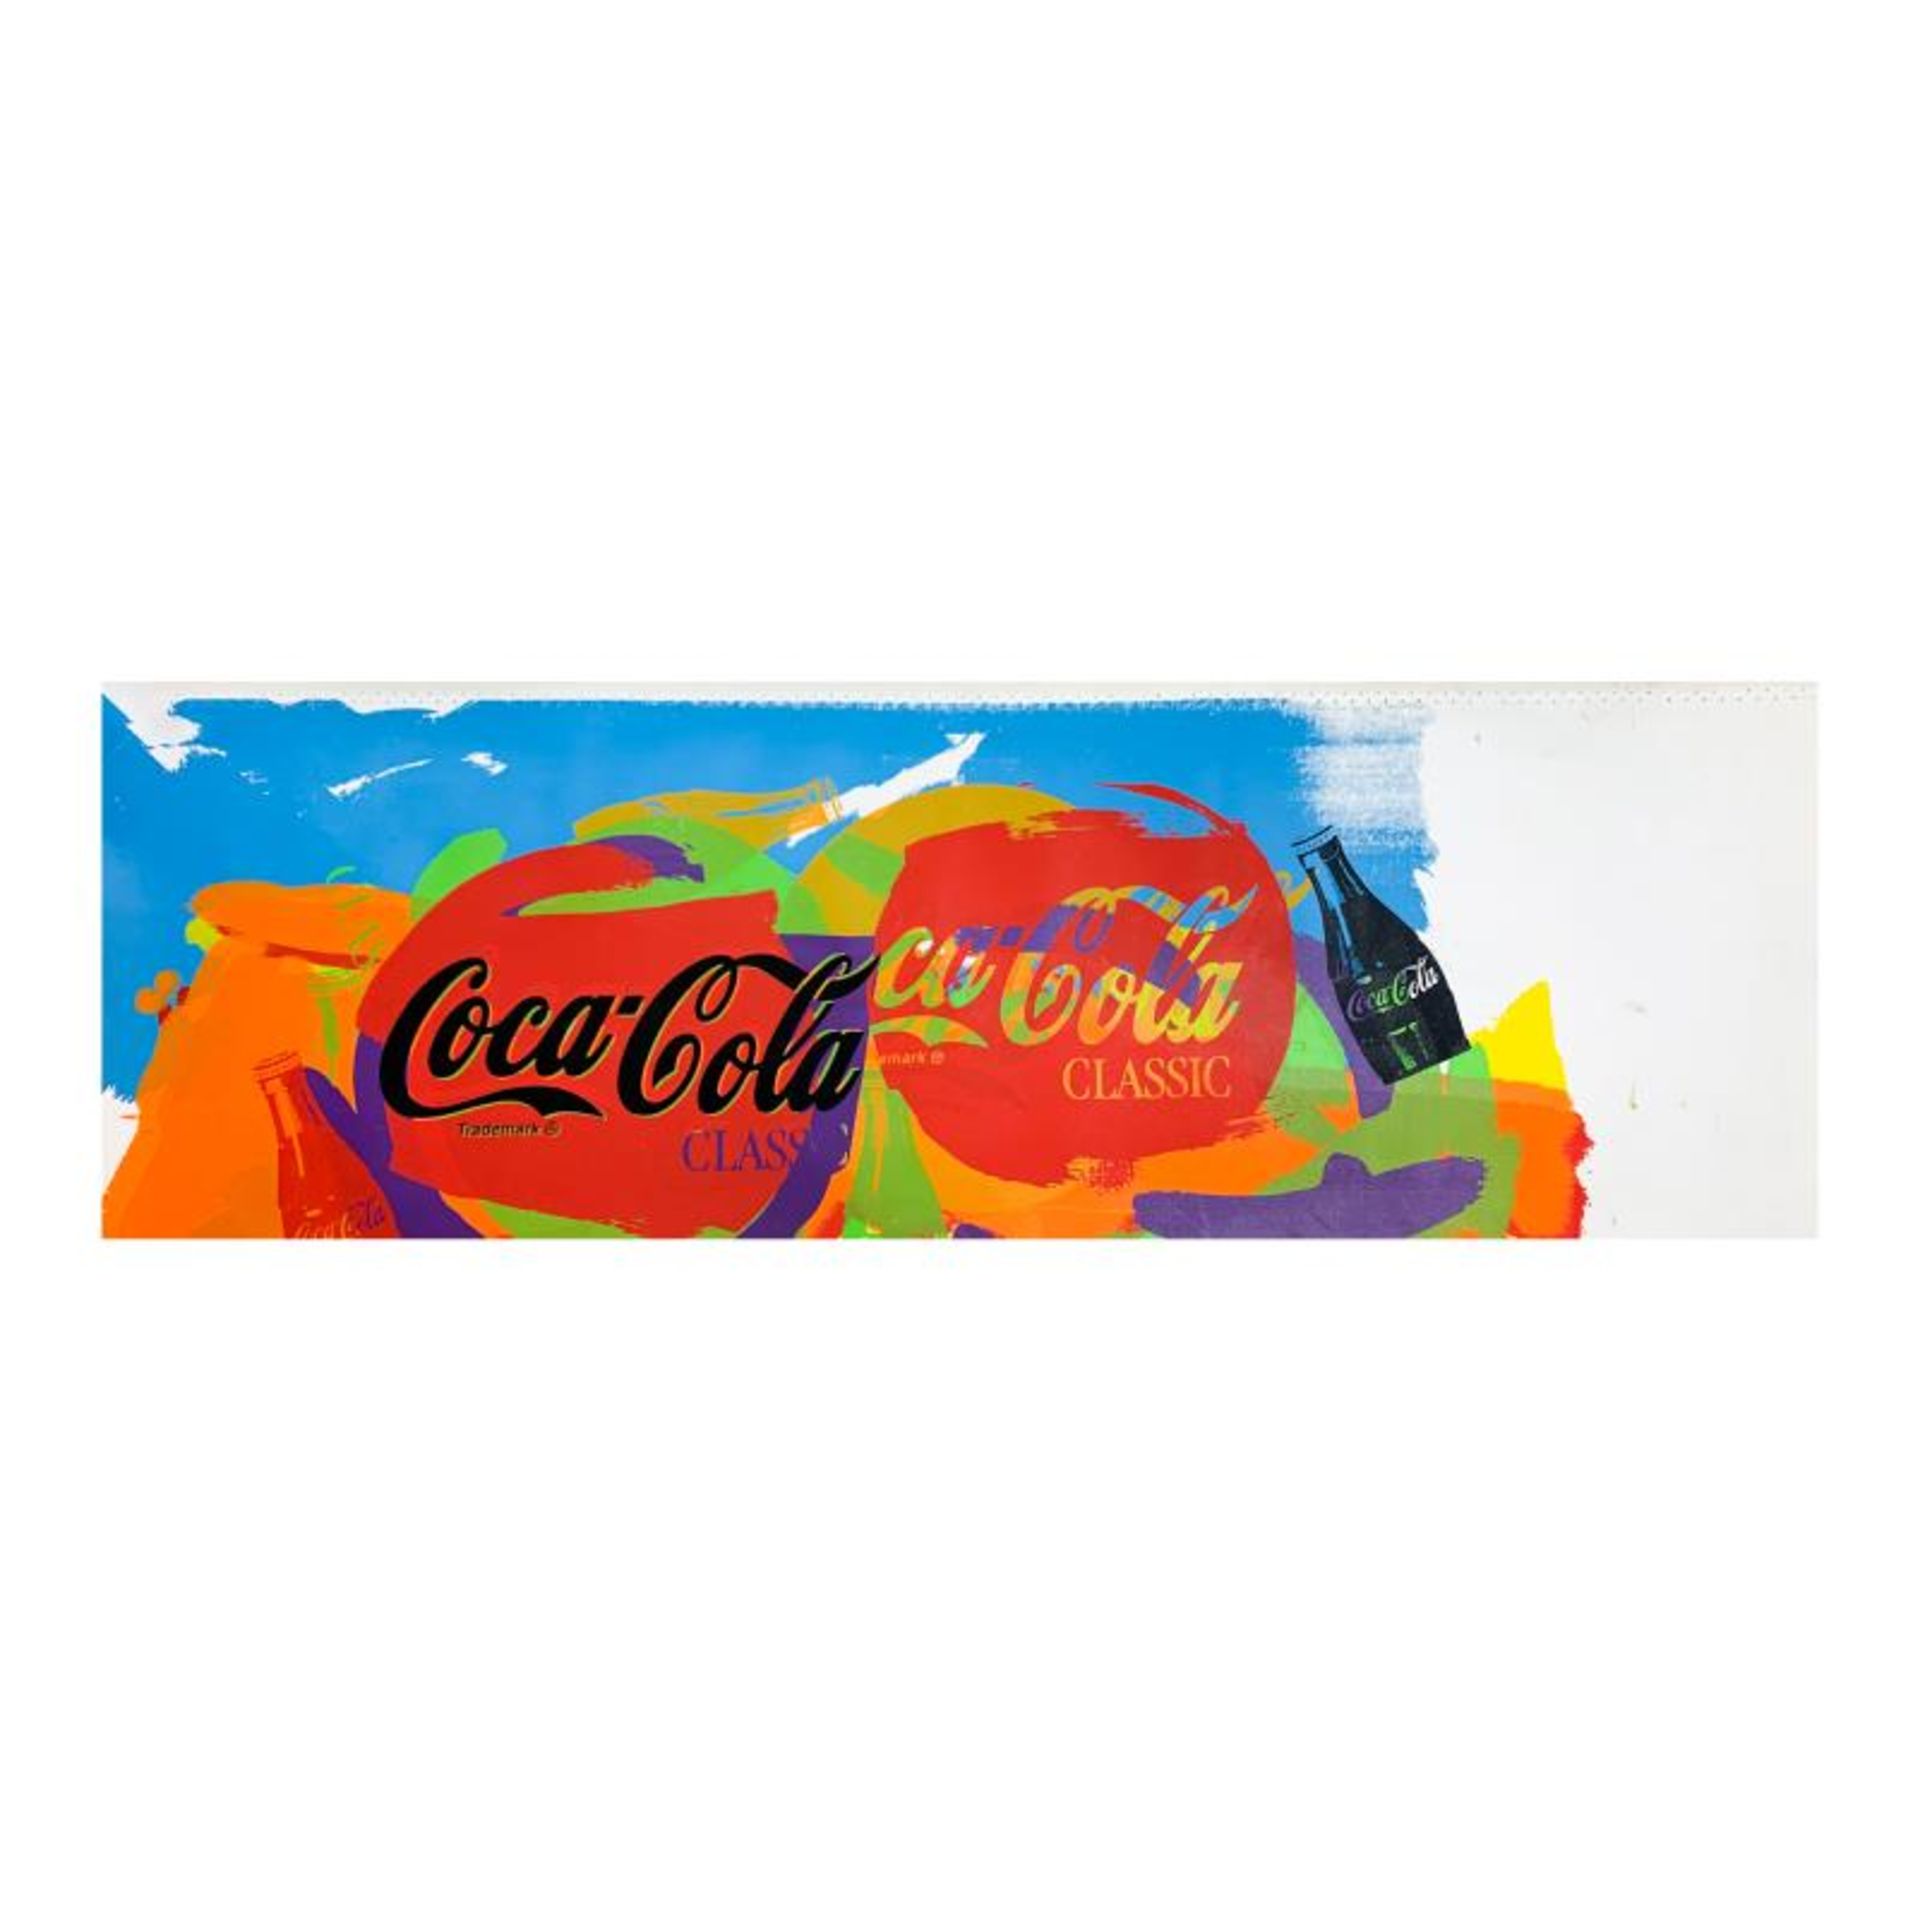 Coca-Cola Tops by Steve Kaufman (1960-2010)